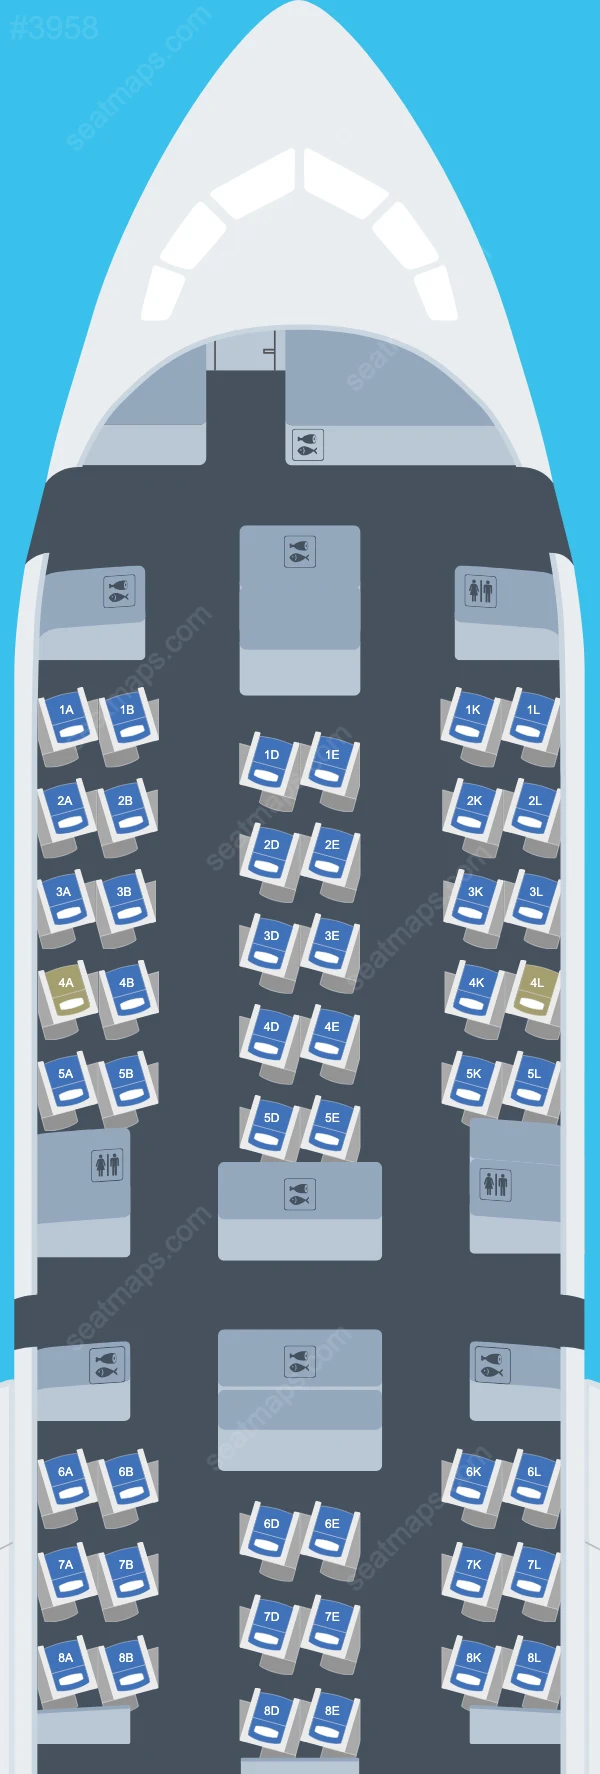 United Boeing 787 Seat Maps 787-9 V.2